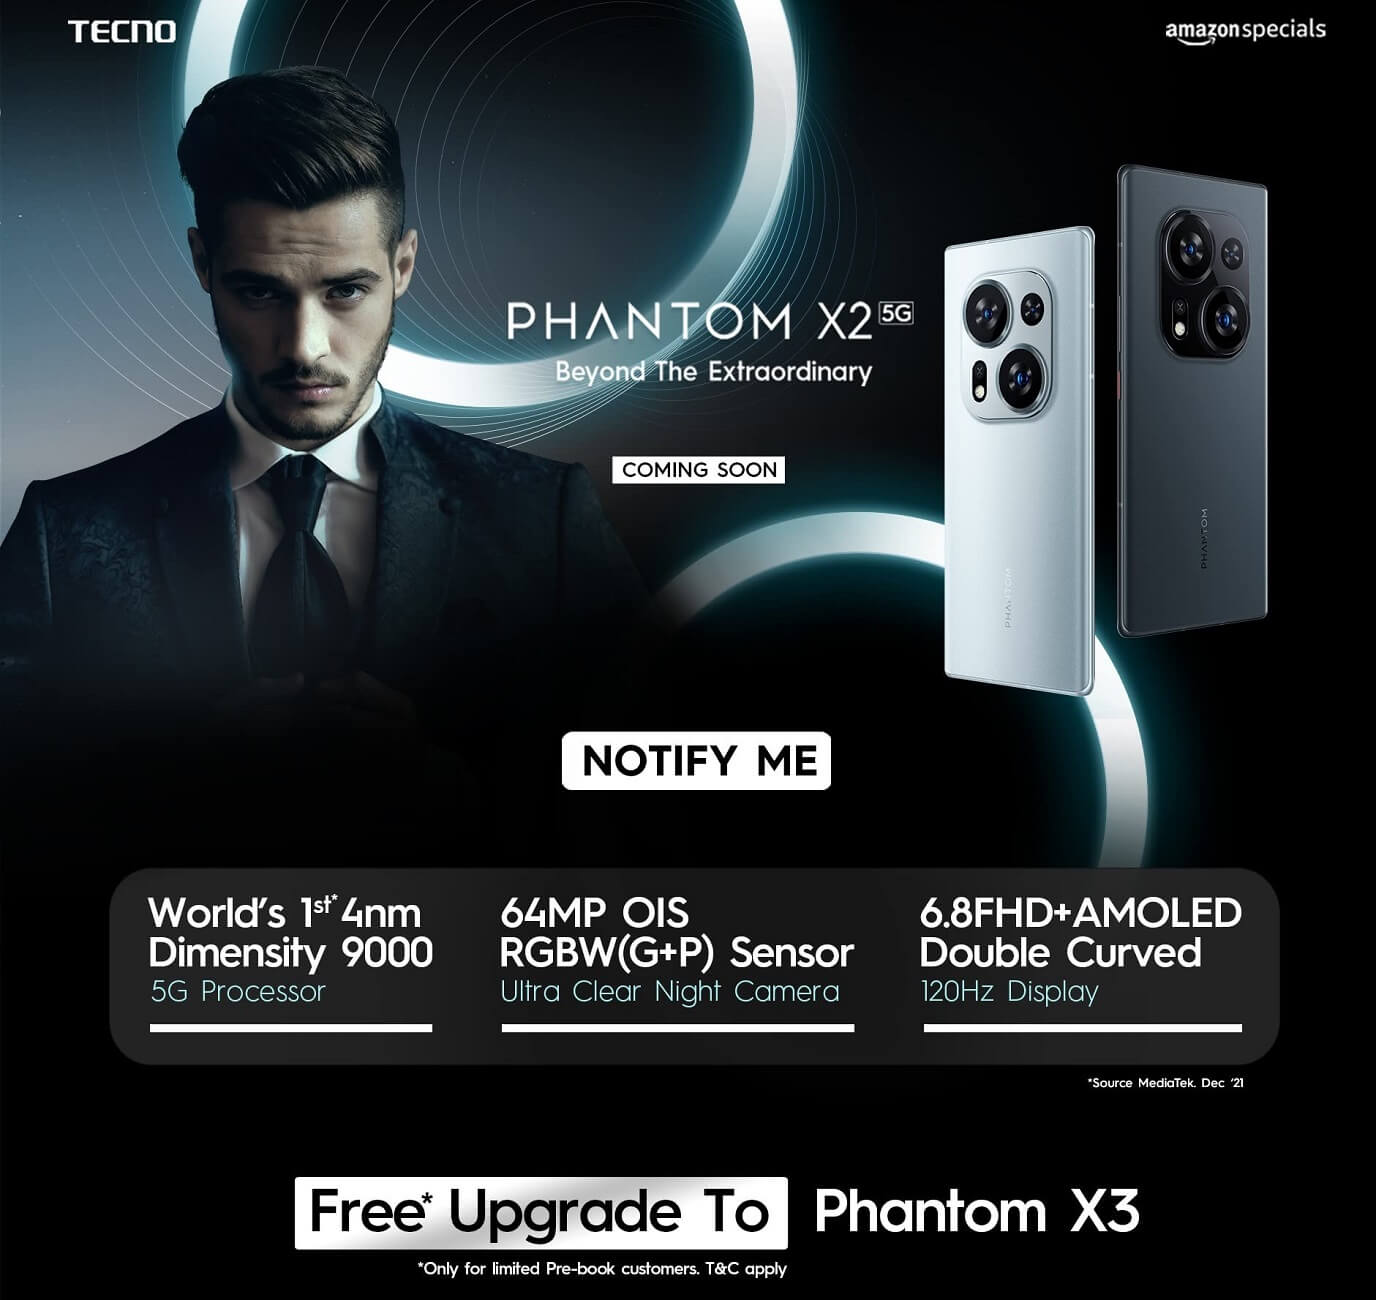 TECNO PHANTOM X2 5G Update feature India